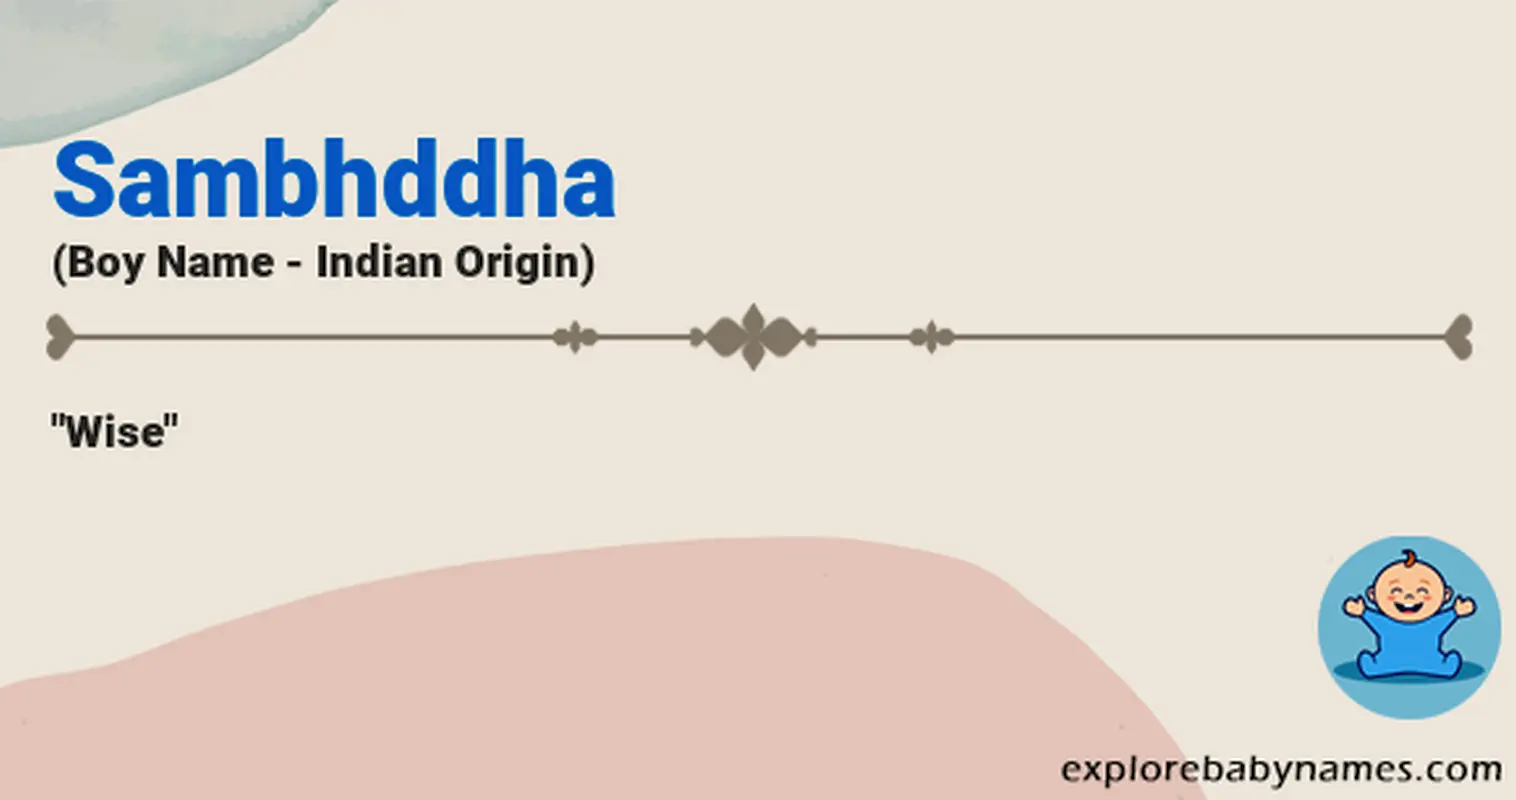 Meaning of Sambhddha